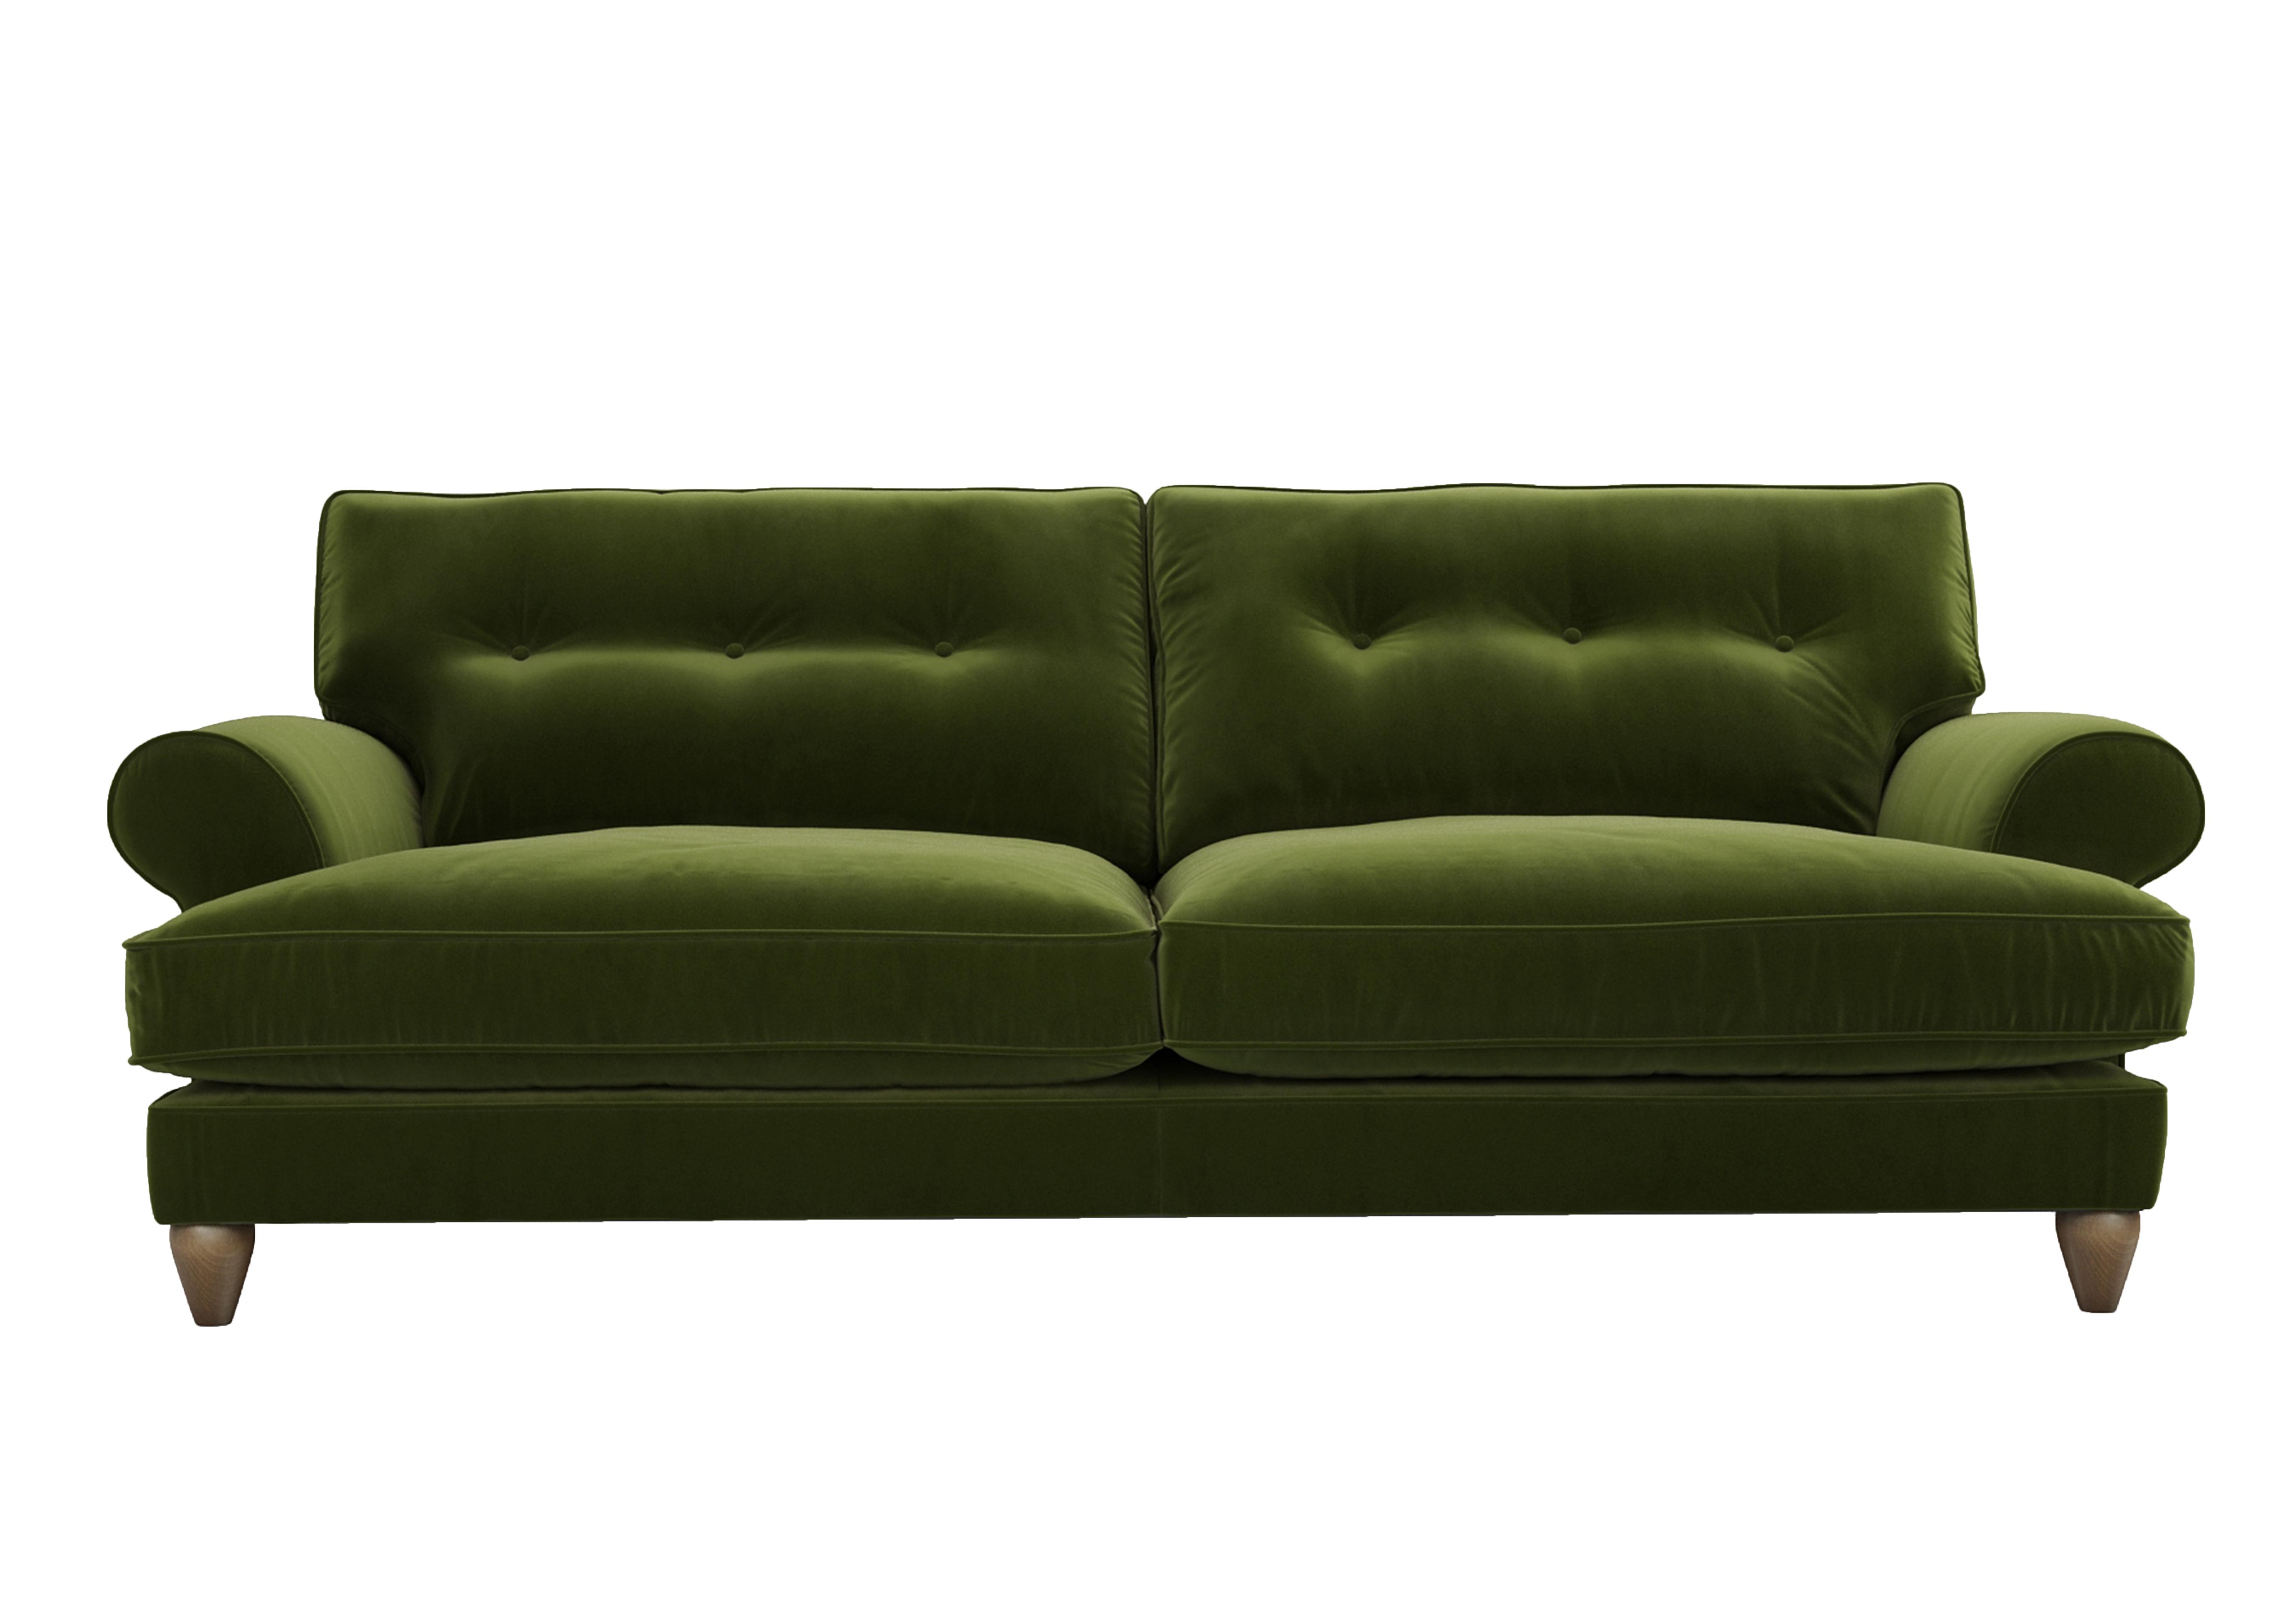 Bronwyn 4 Seater Fabric Classic Back Sofa in Woo160 Woodland Moss on Furniture Village